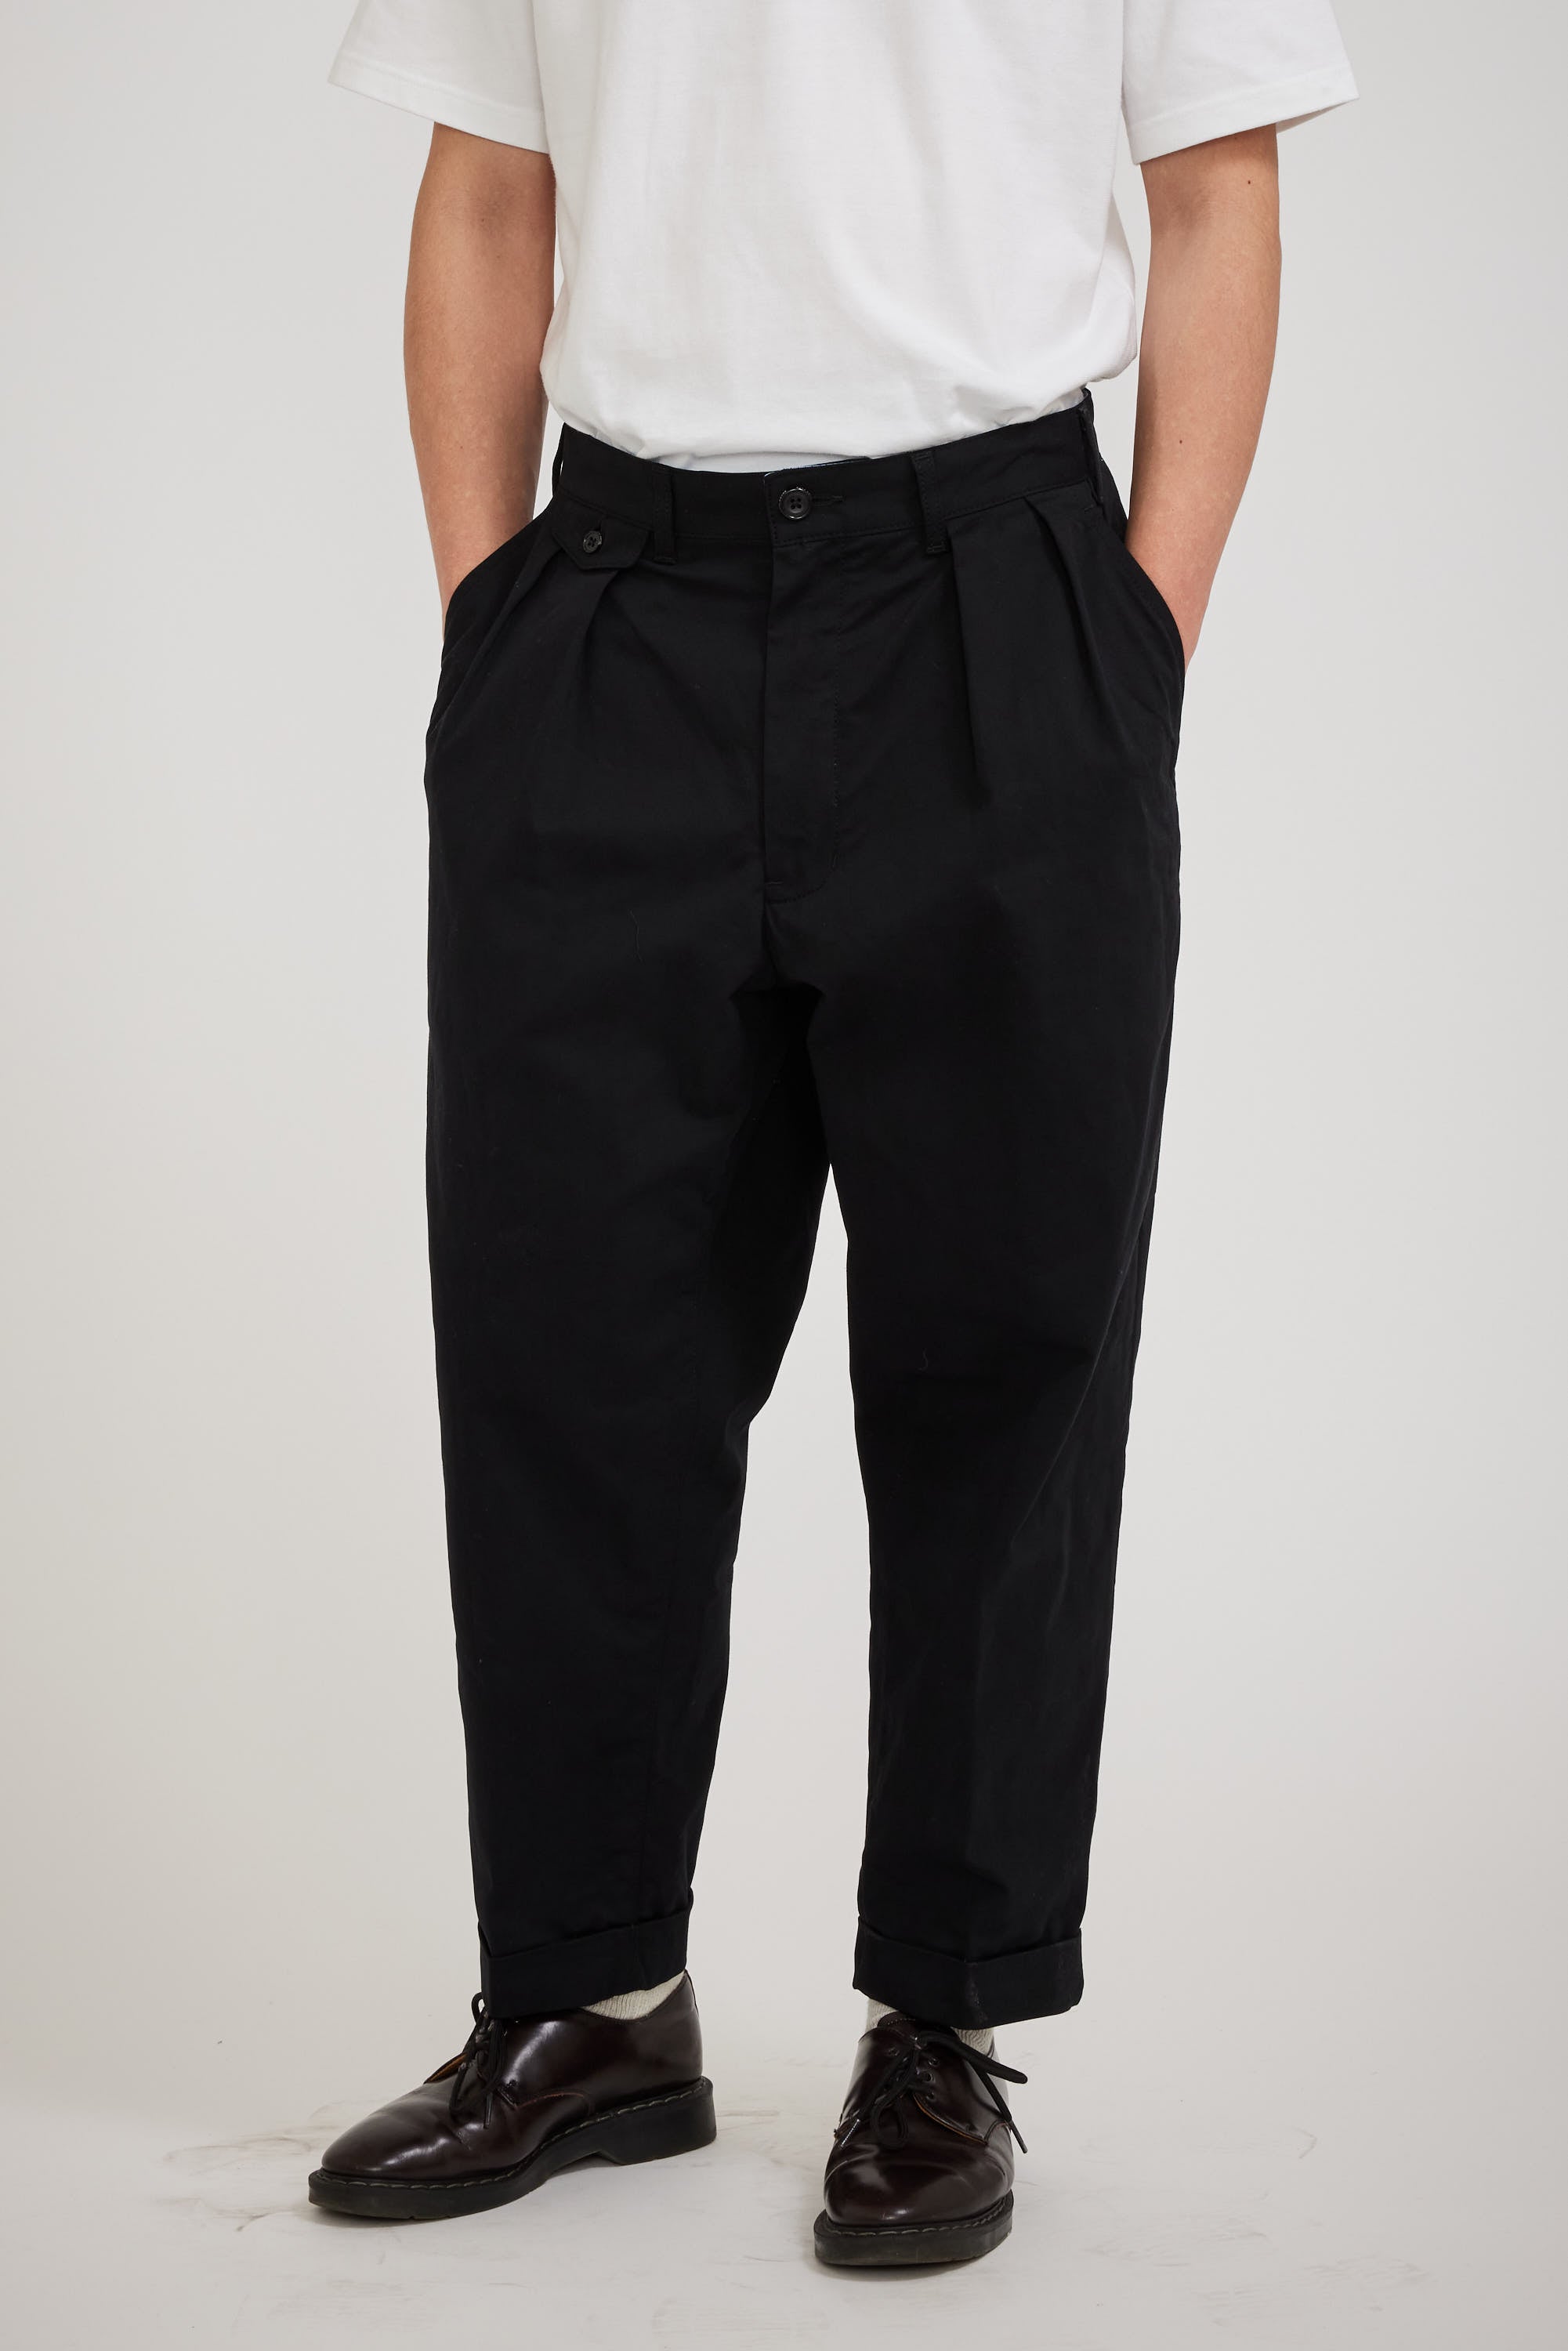 Black Pleated Tuxedo Pants | Men's Pants